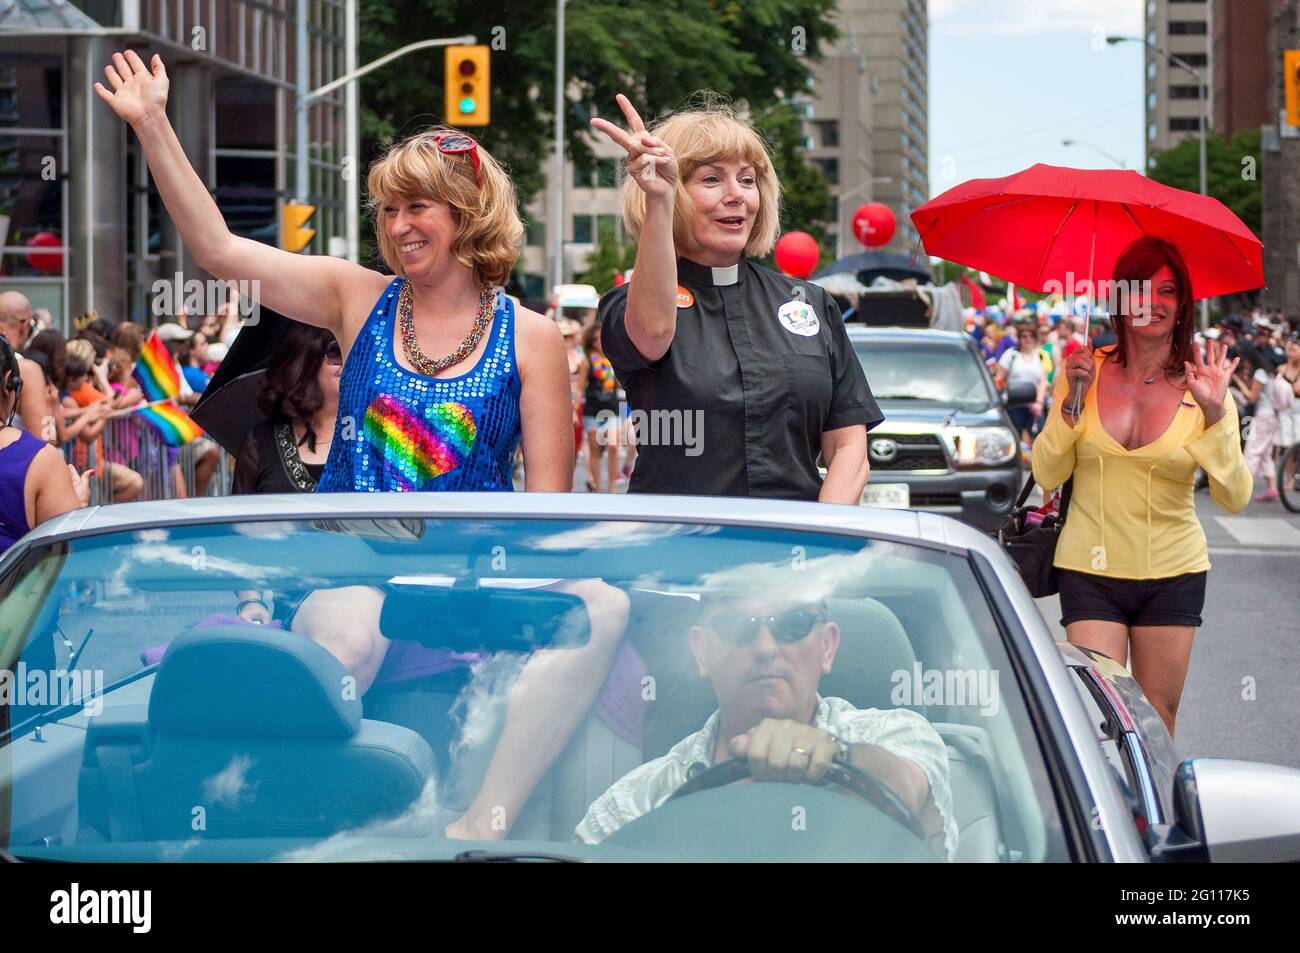 Laurel Broten and Cheri DiNovo - Pride Parade Co-Marshals - partaking in the Pride Parade - the closing activity of the Toronto Pride Festival. Stock Photo